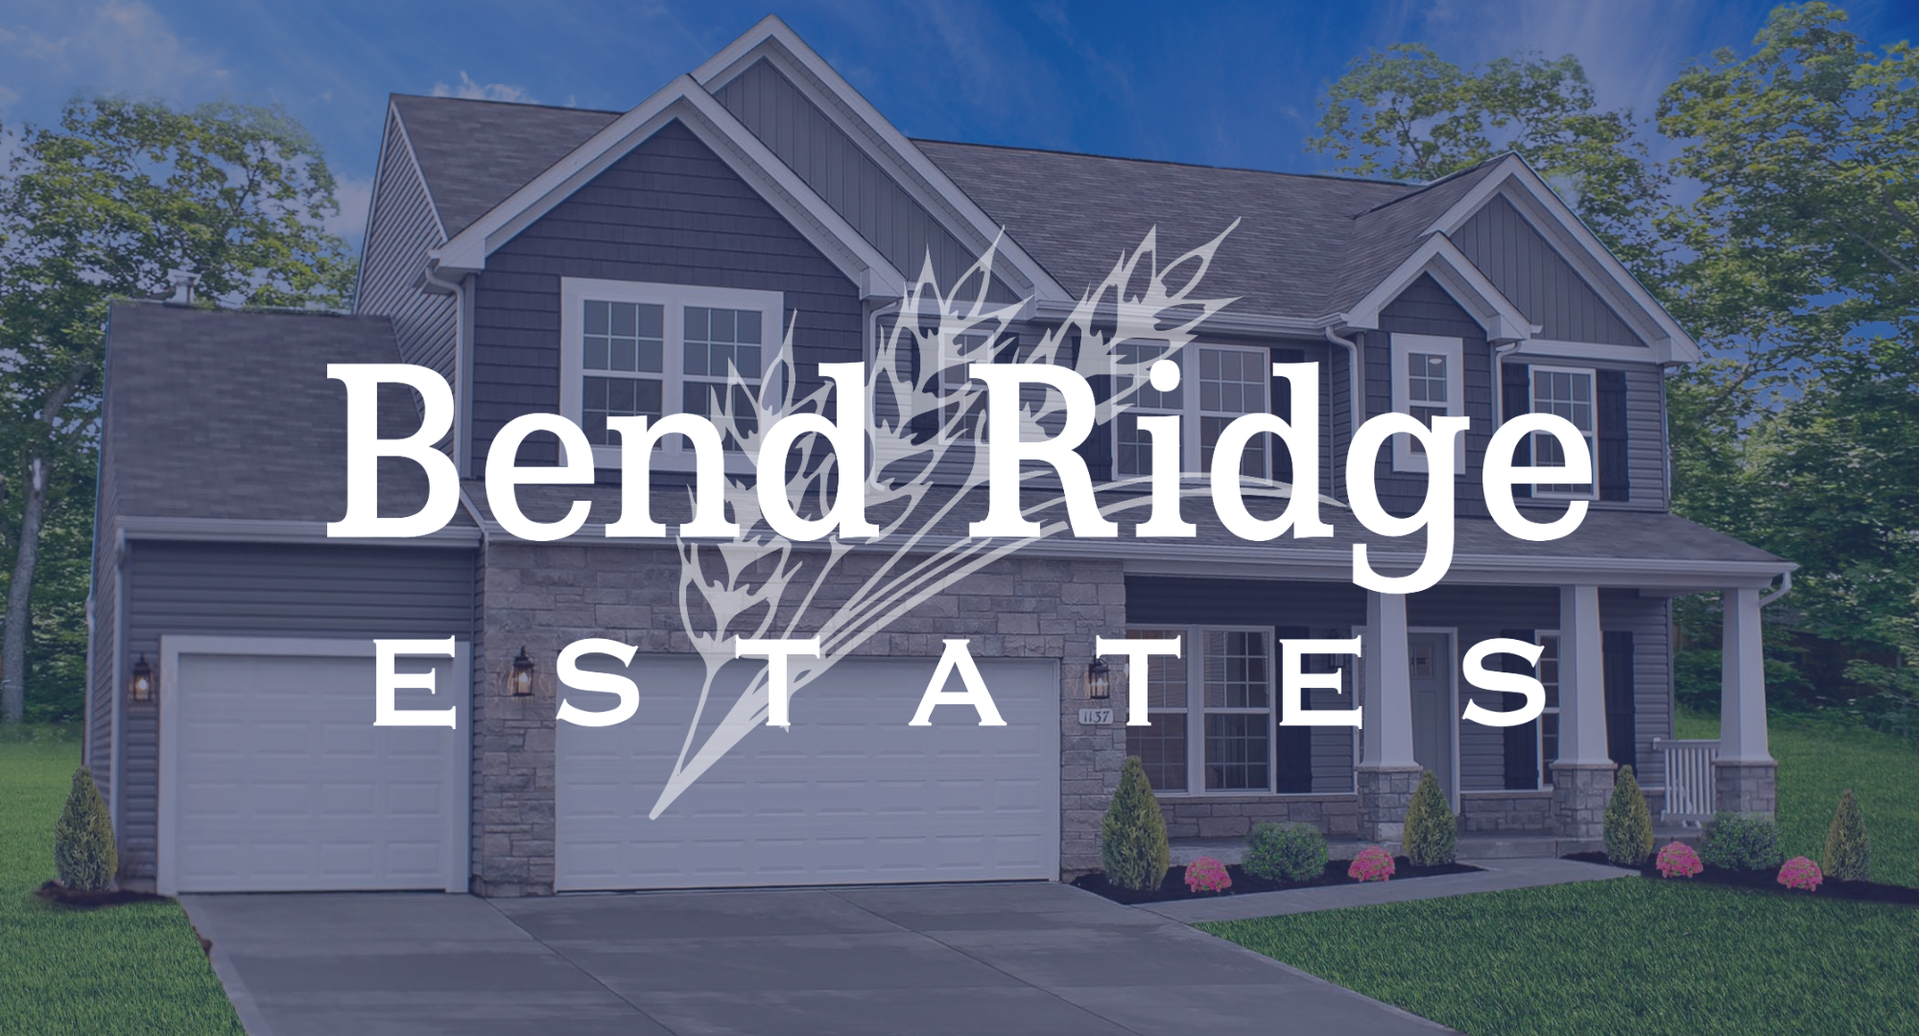 Bend Ridge Estates - New Homes Pacific, MO. Bend Ridge Estates New Homes in Pacific, MO